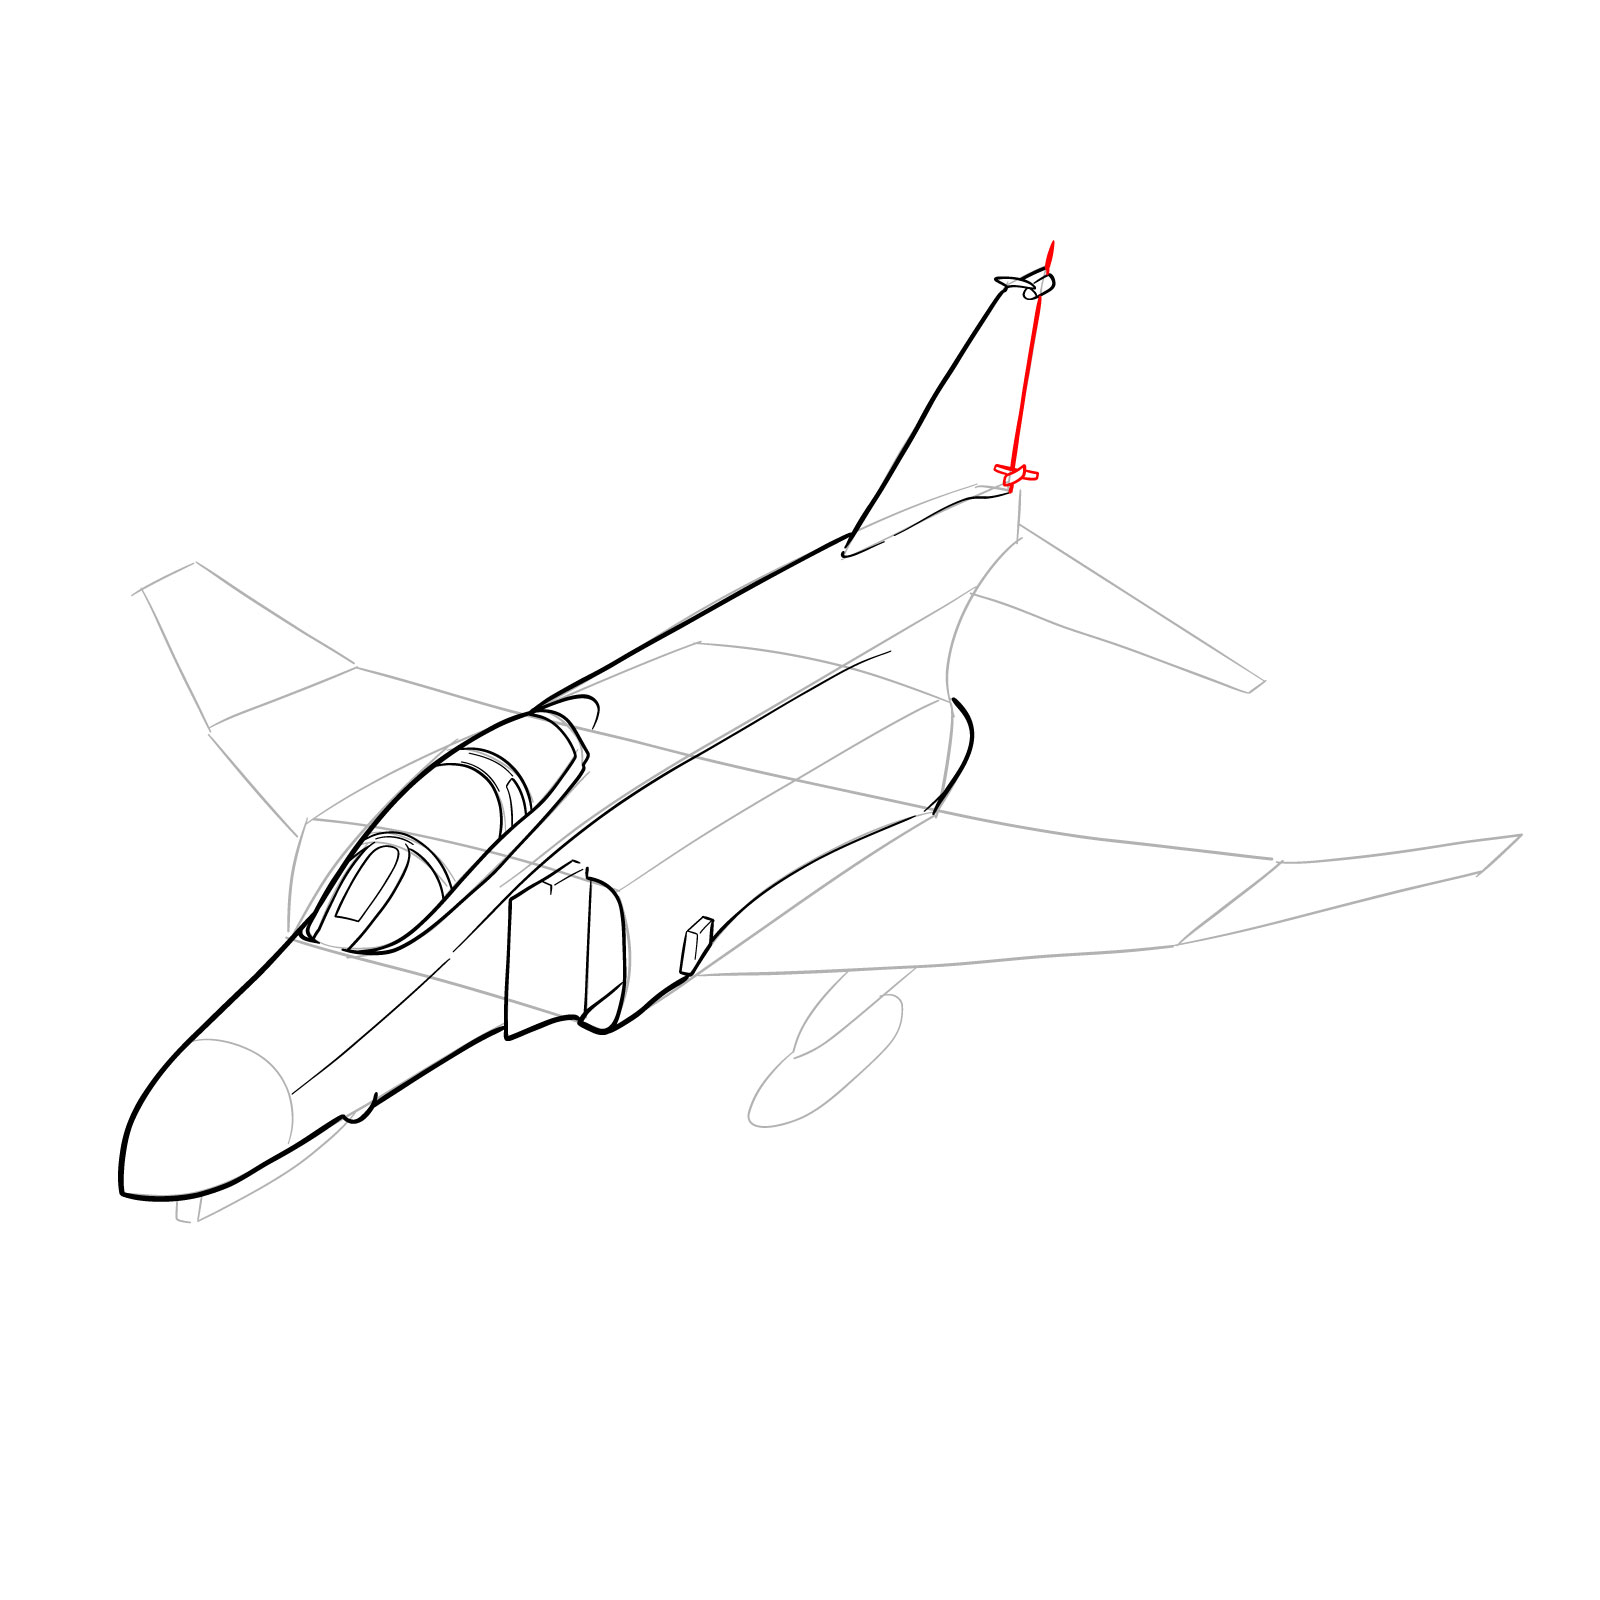 How to draw McDonnell Douglas F-4 Phantom II - step 21